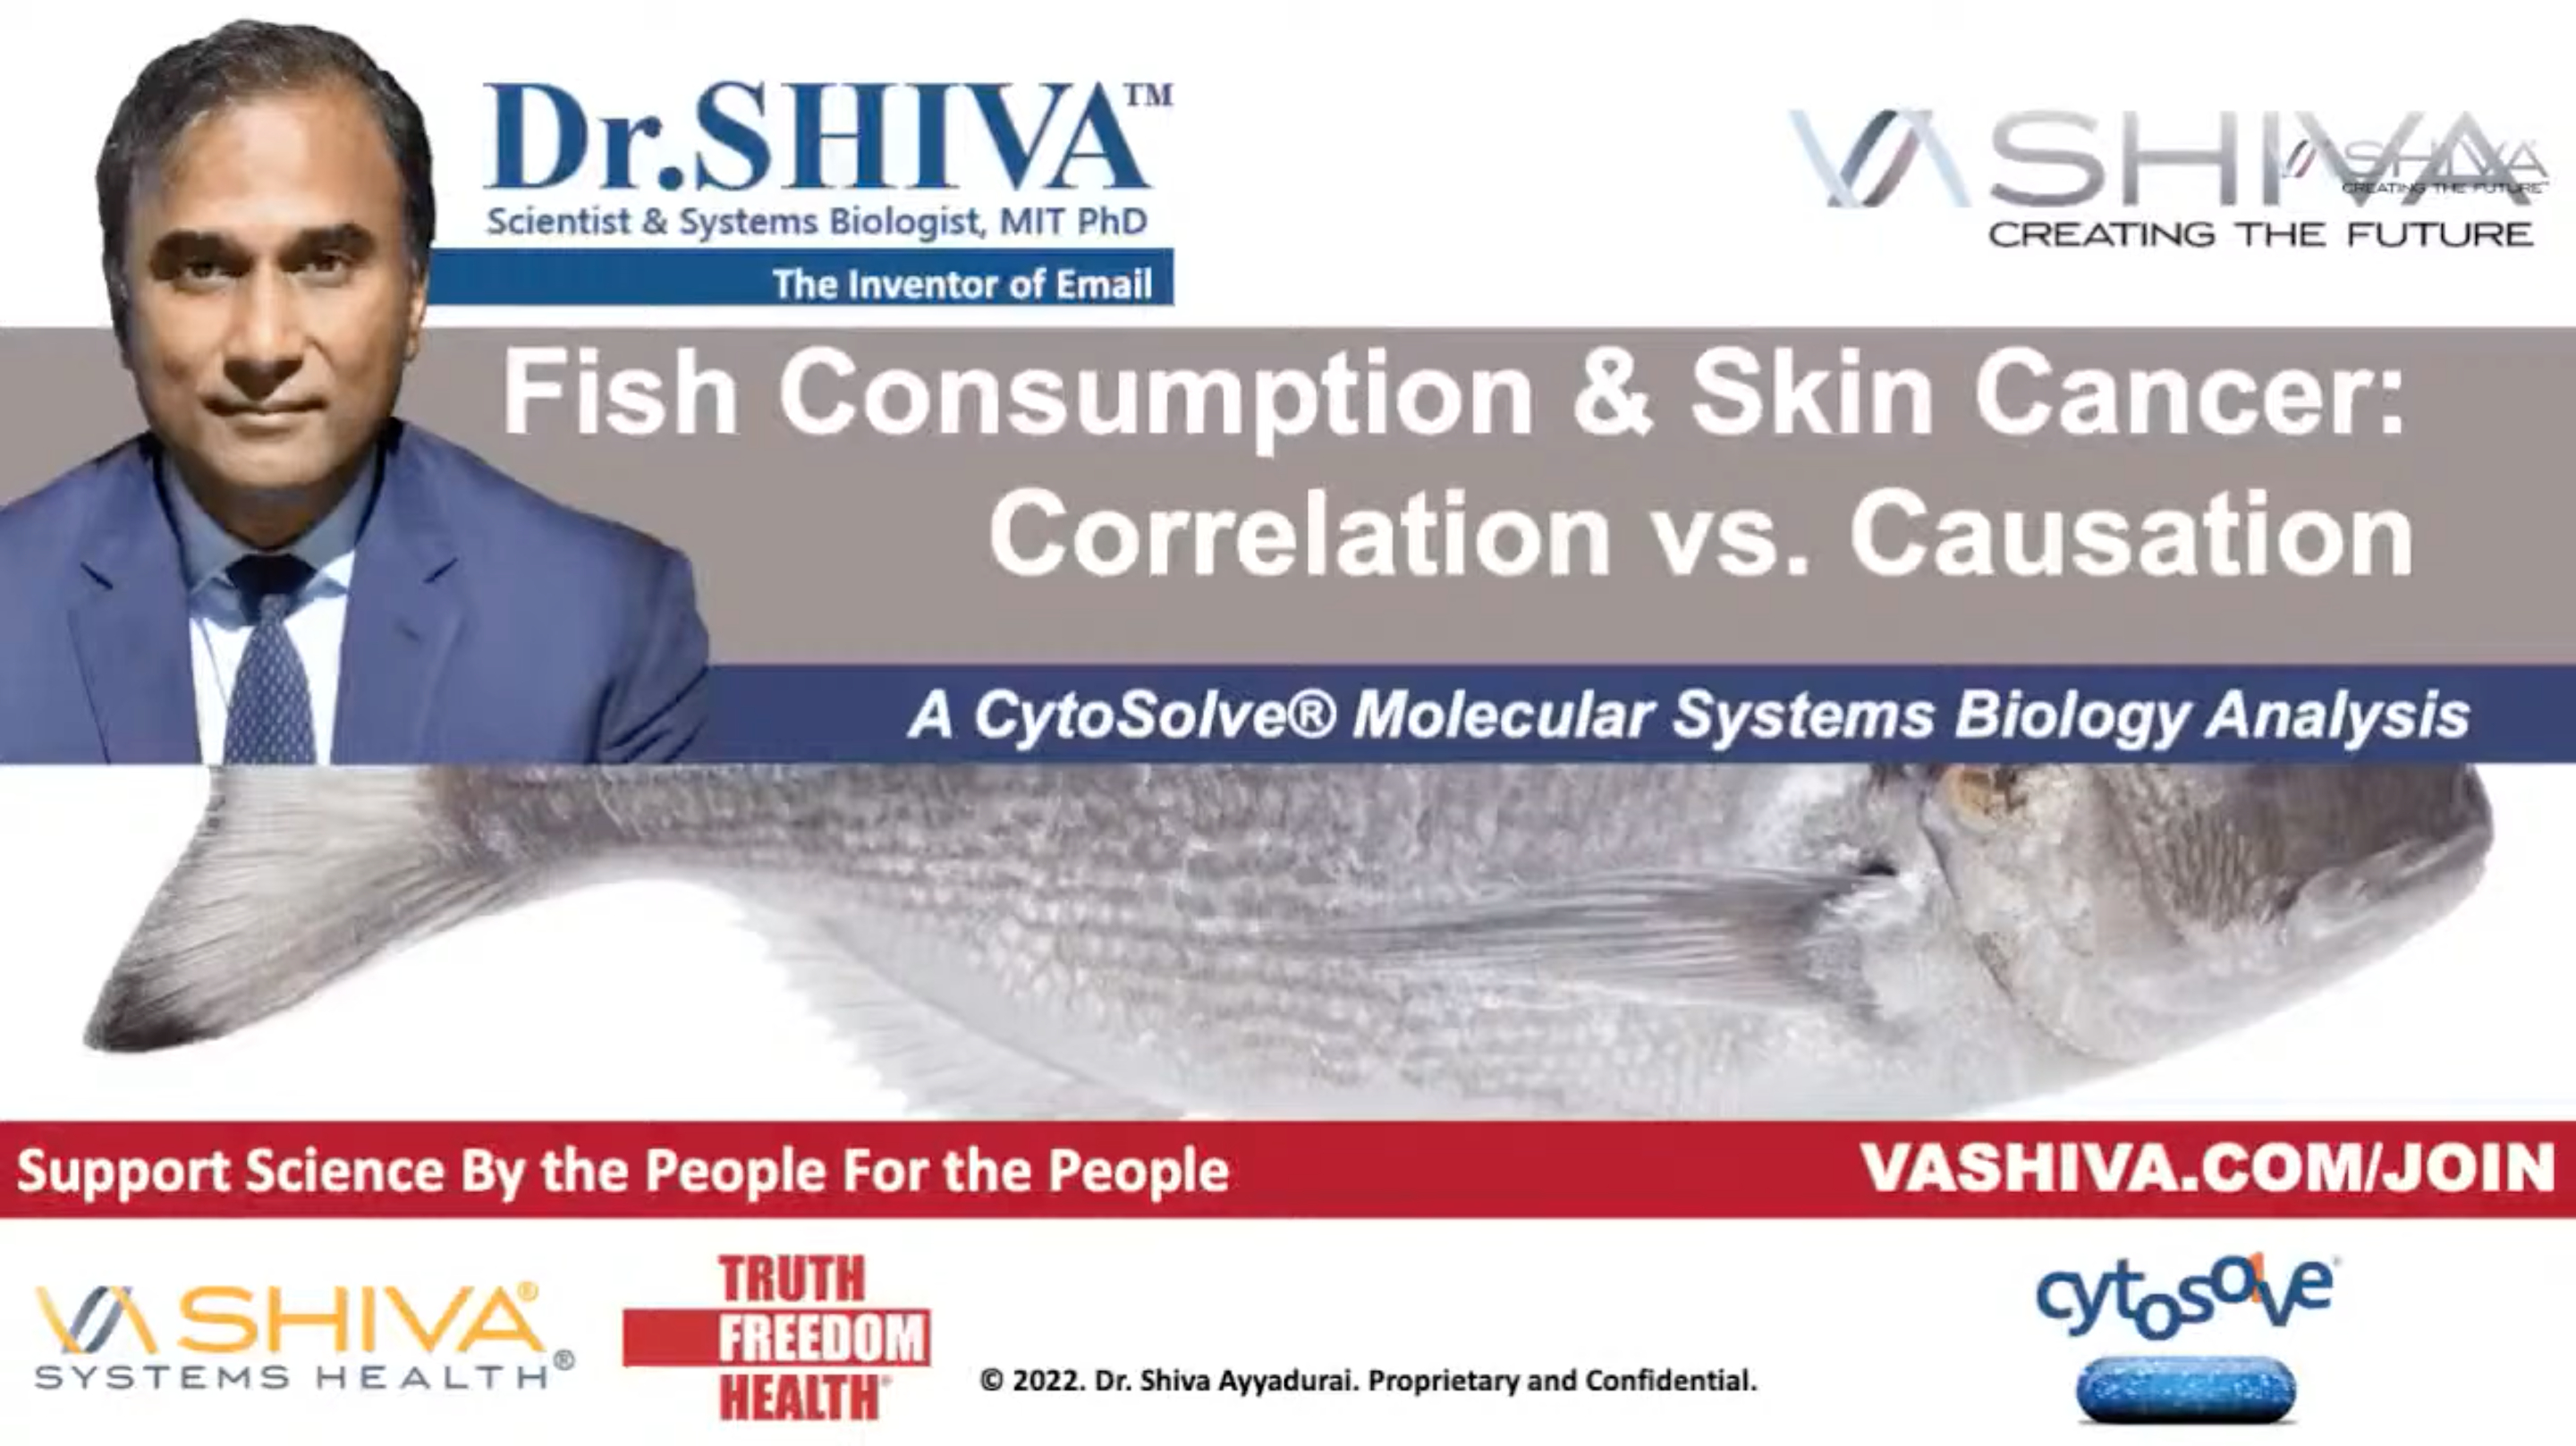 Dr.SHIVA LIVE: Fish Consumption & Skin Cancer: Correlation vs Causation.